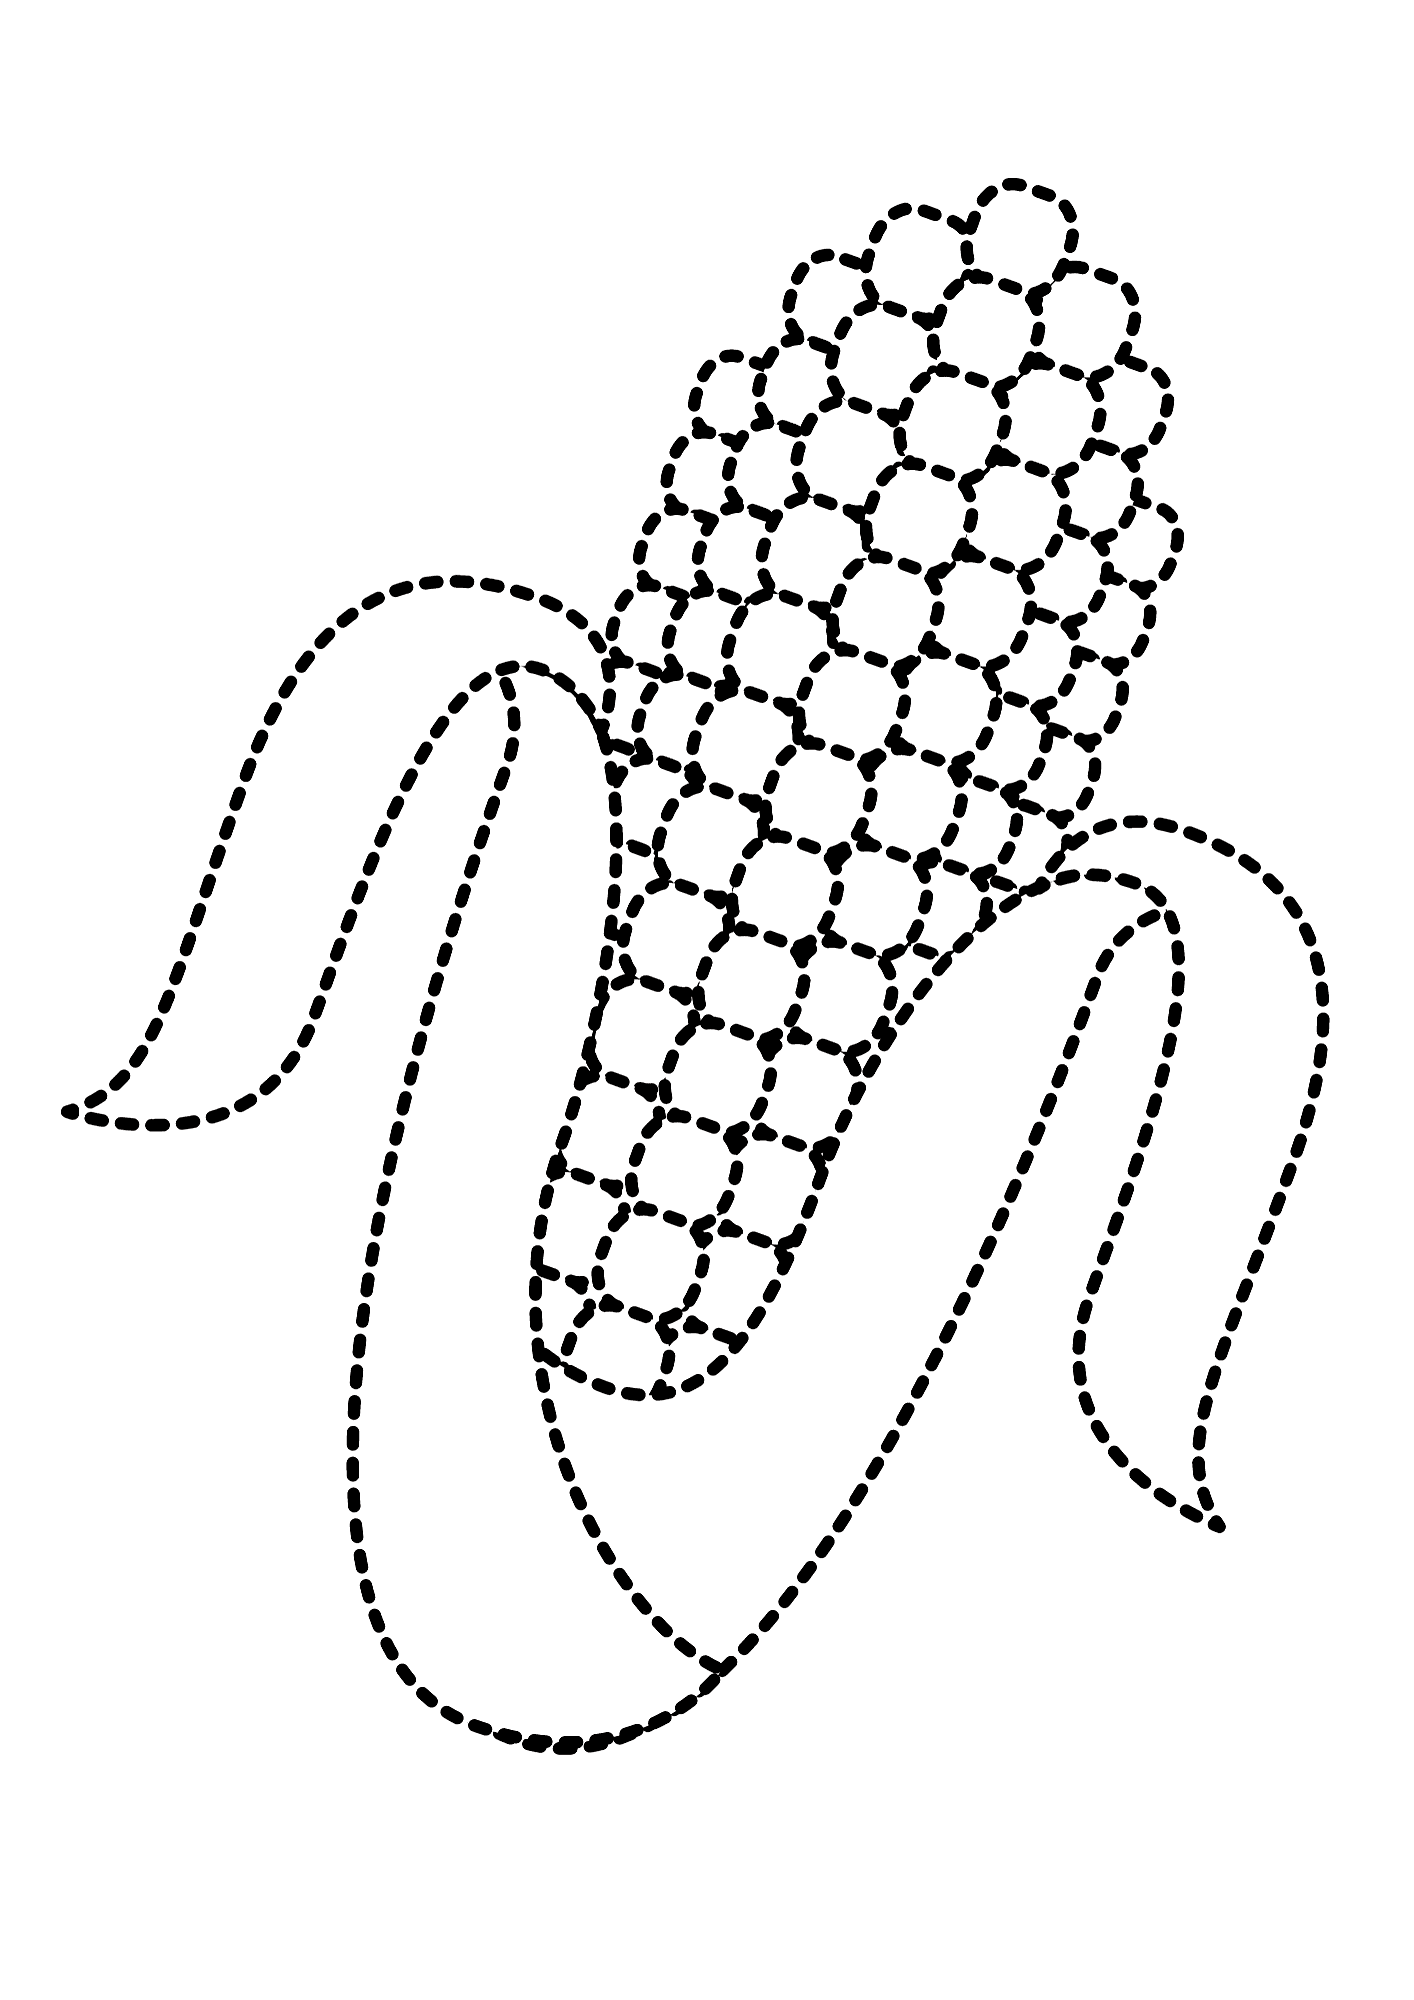 Corn Dot To Dot Coloring Page